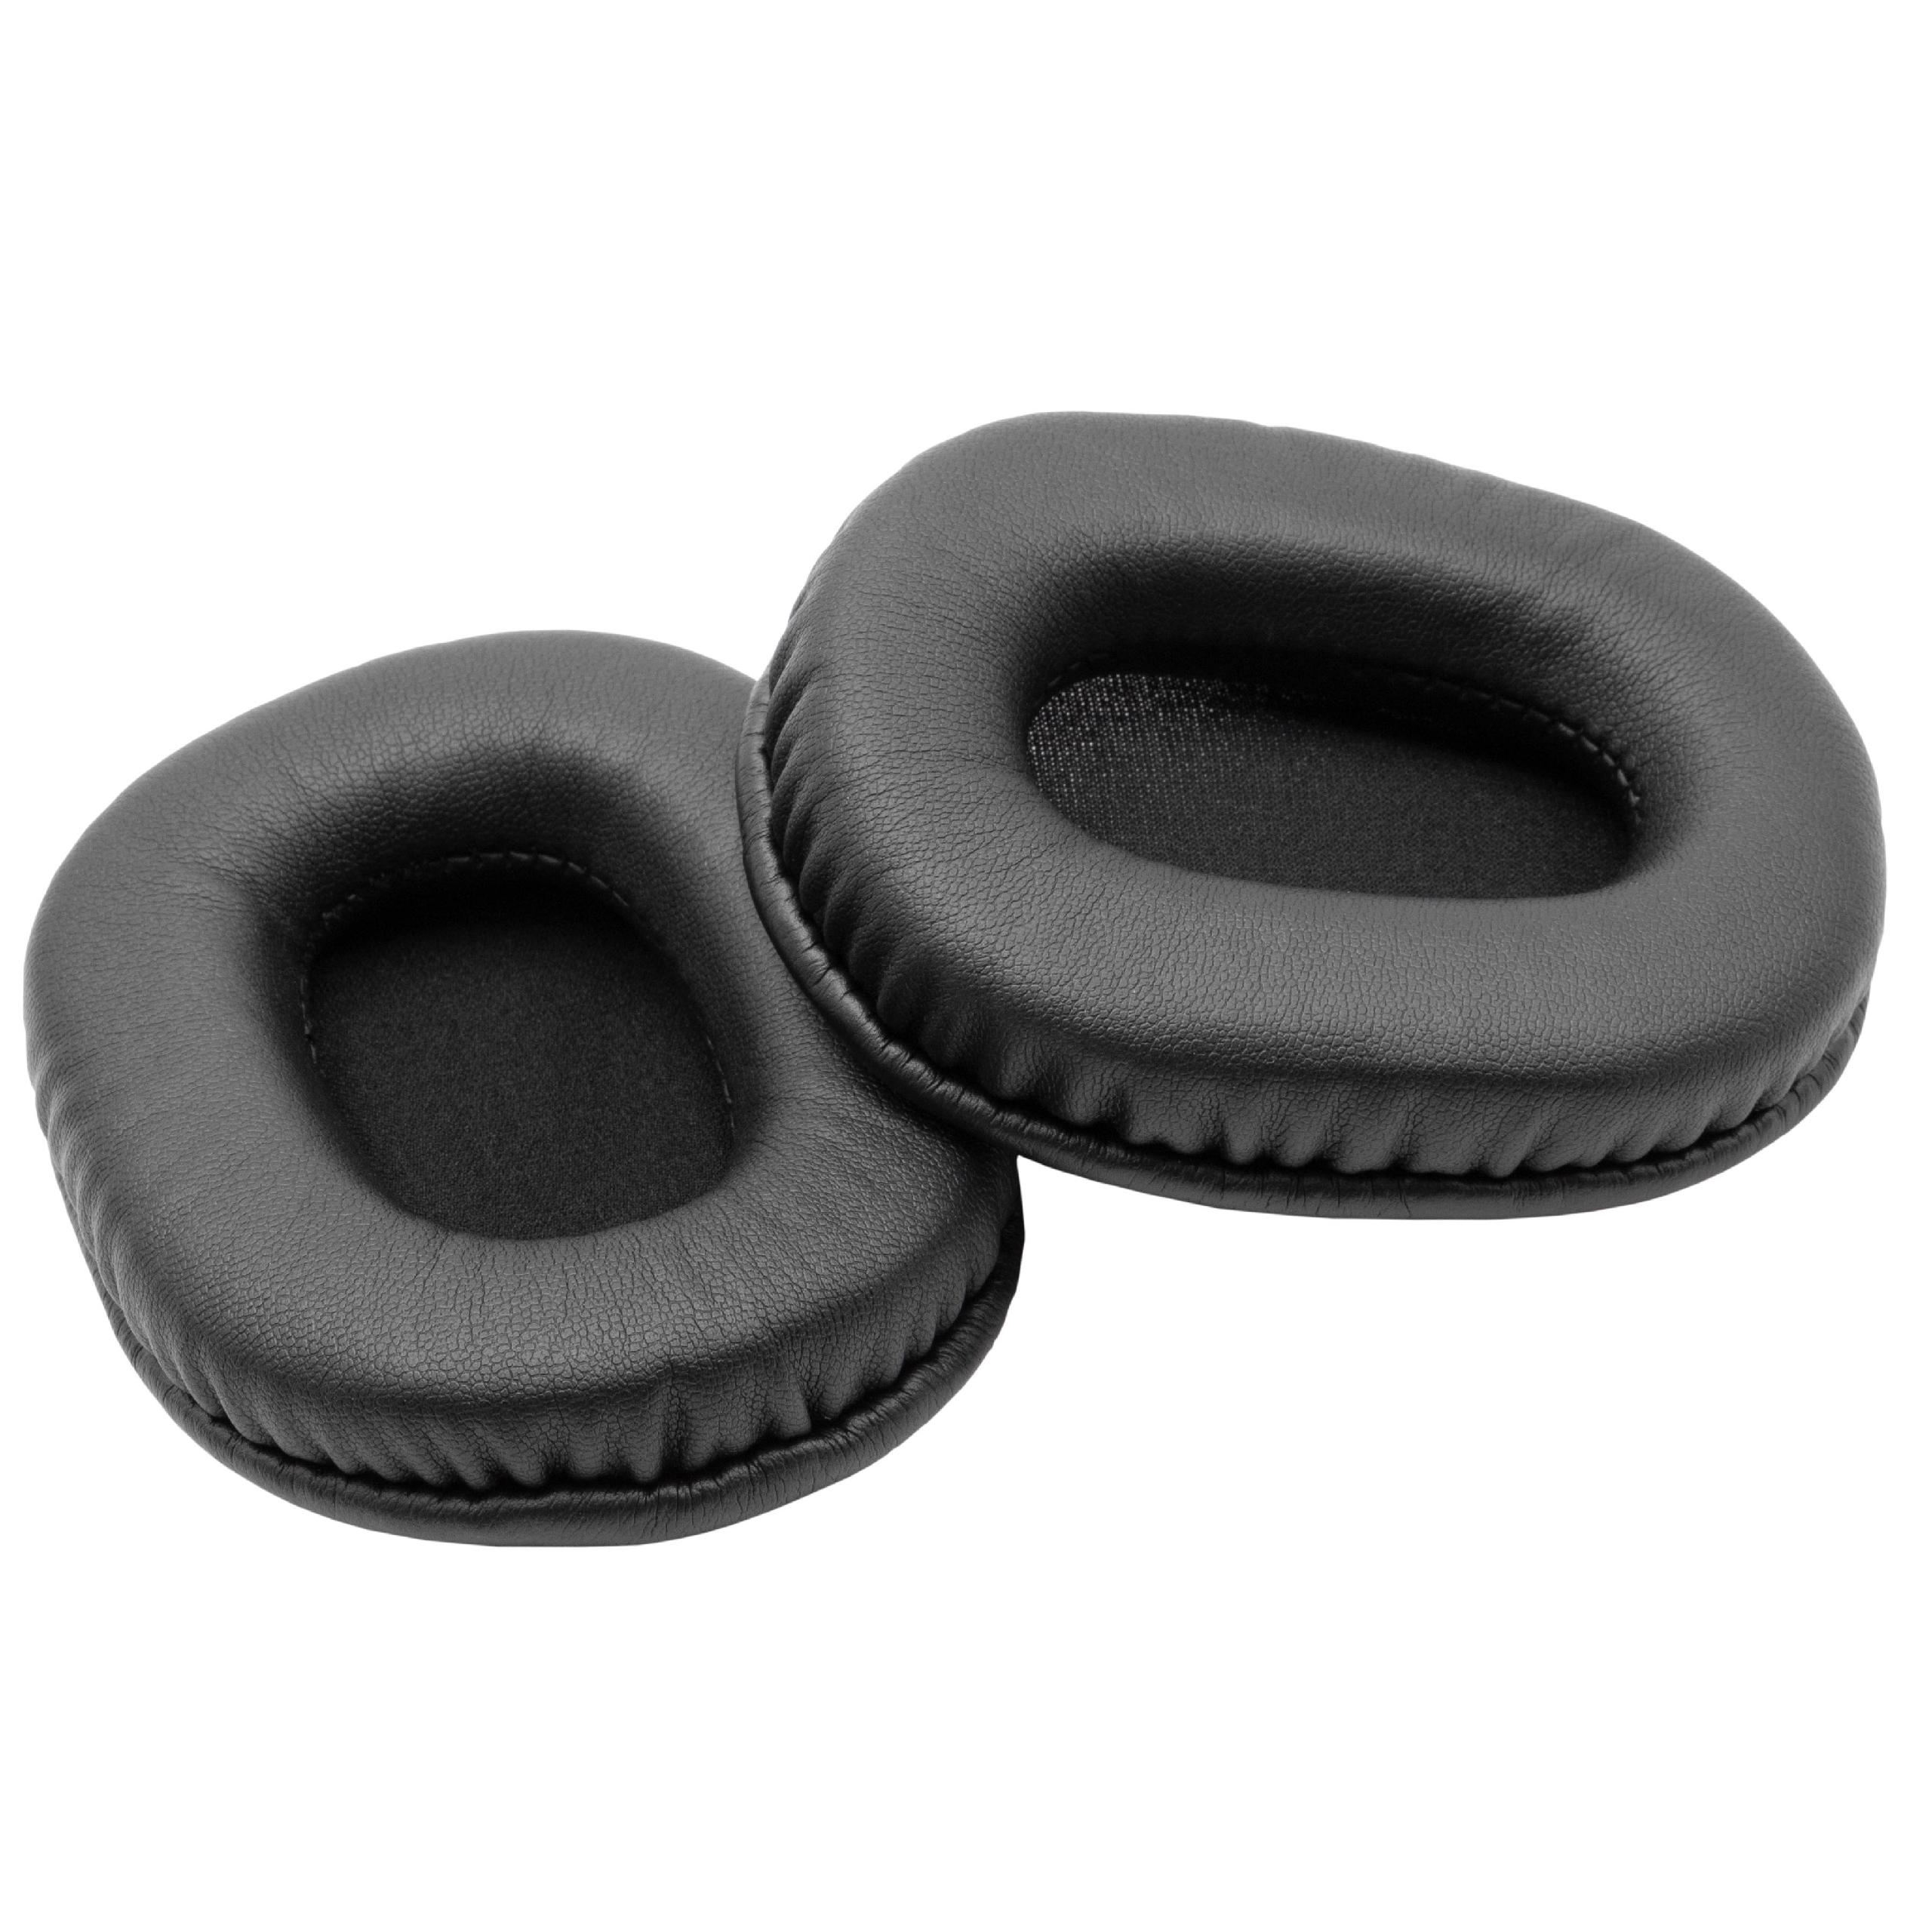 Ear Pads suitable for Audio Technica ATH-M20 Headphones etc. - polyurethane / foam, 11 mm thick